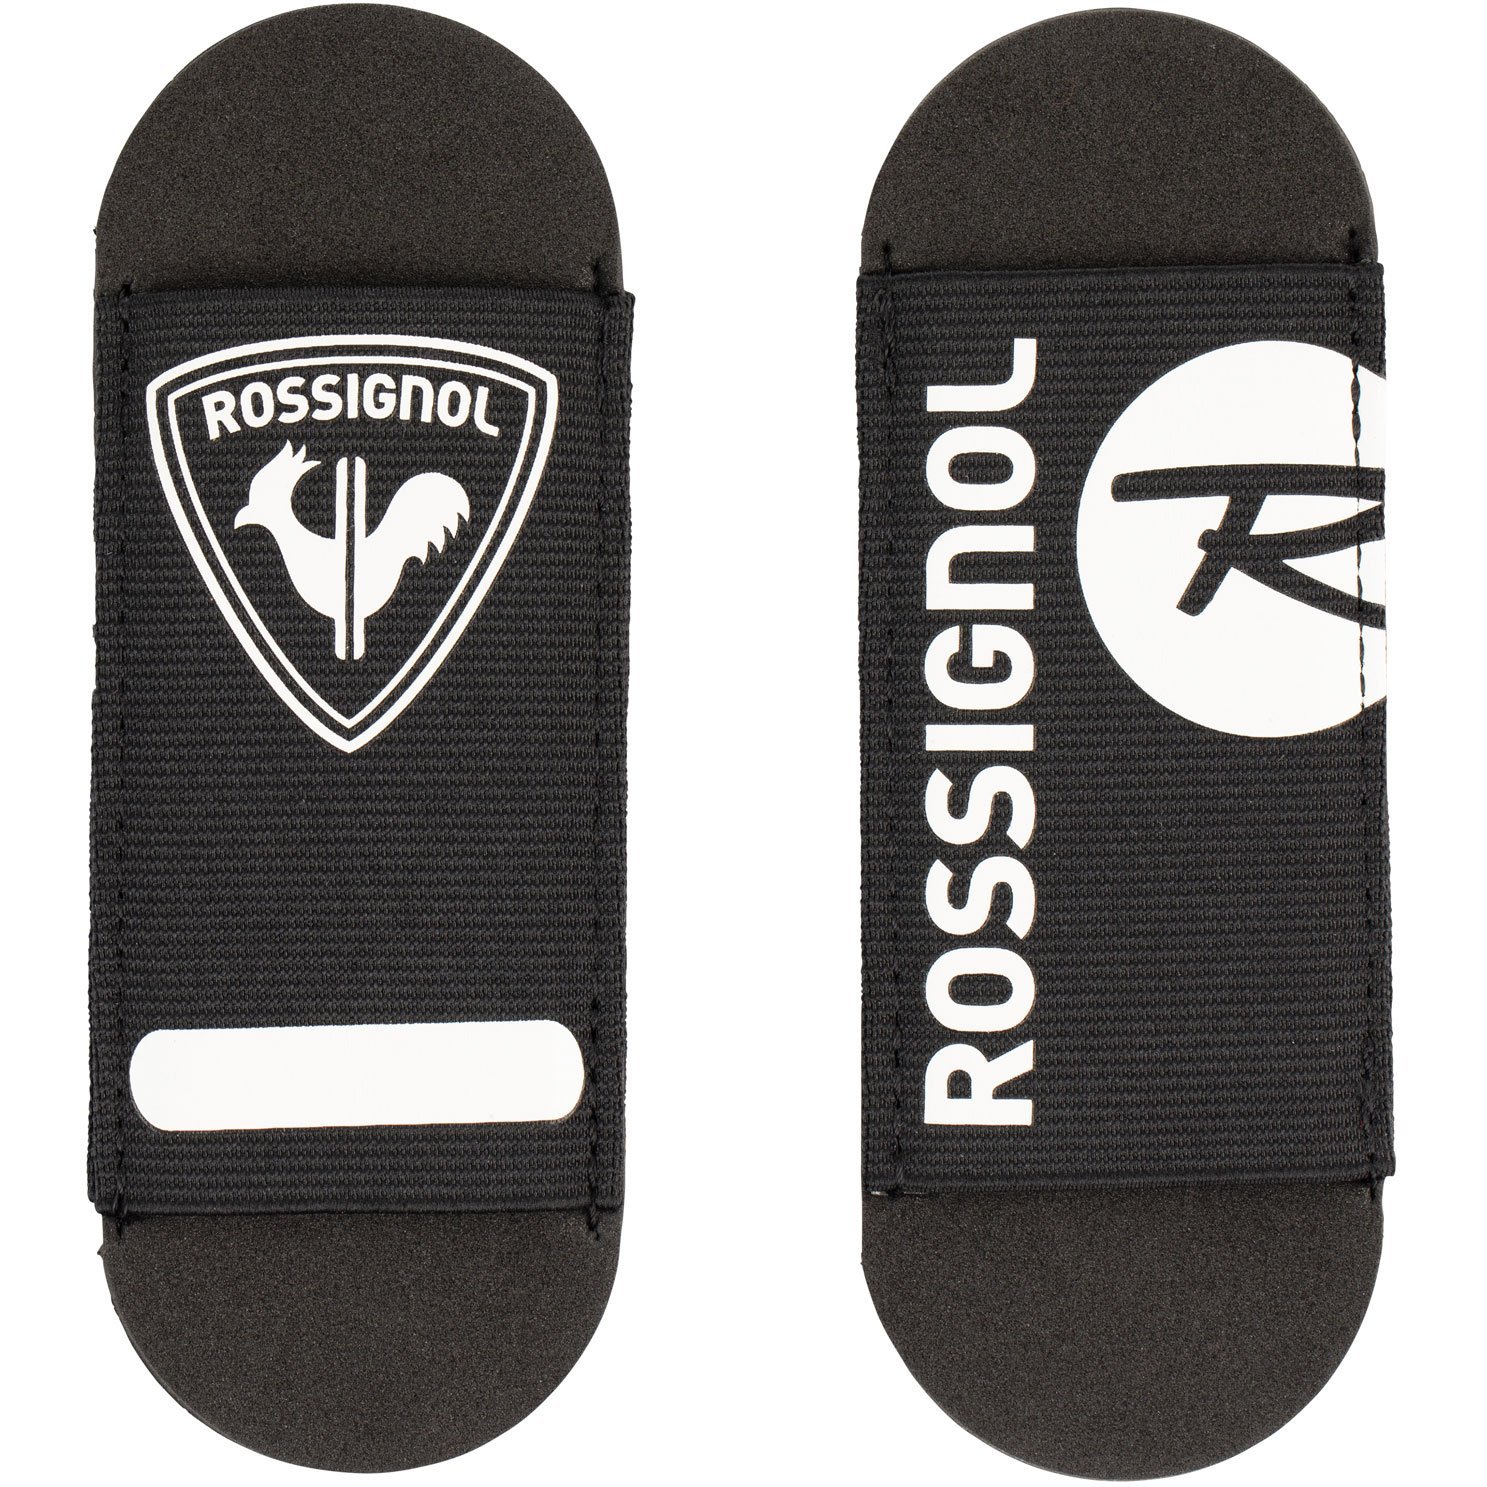 Rossignol Nordic ski straps